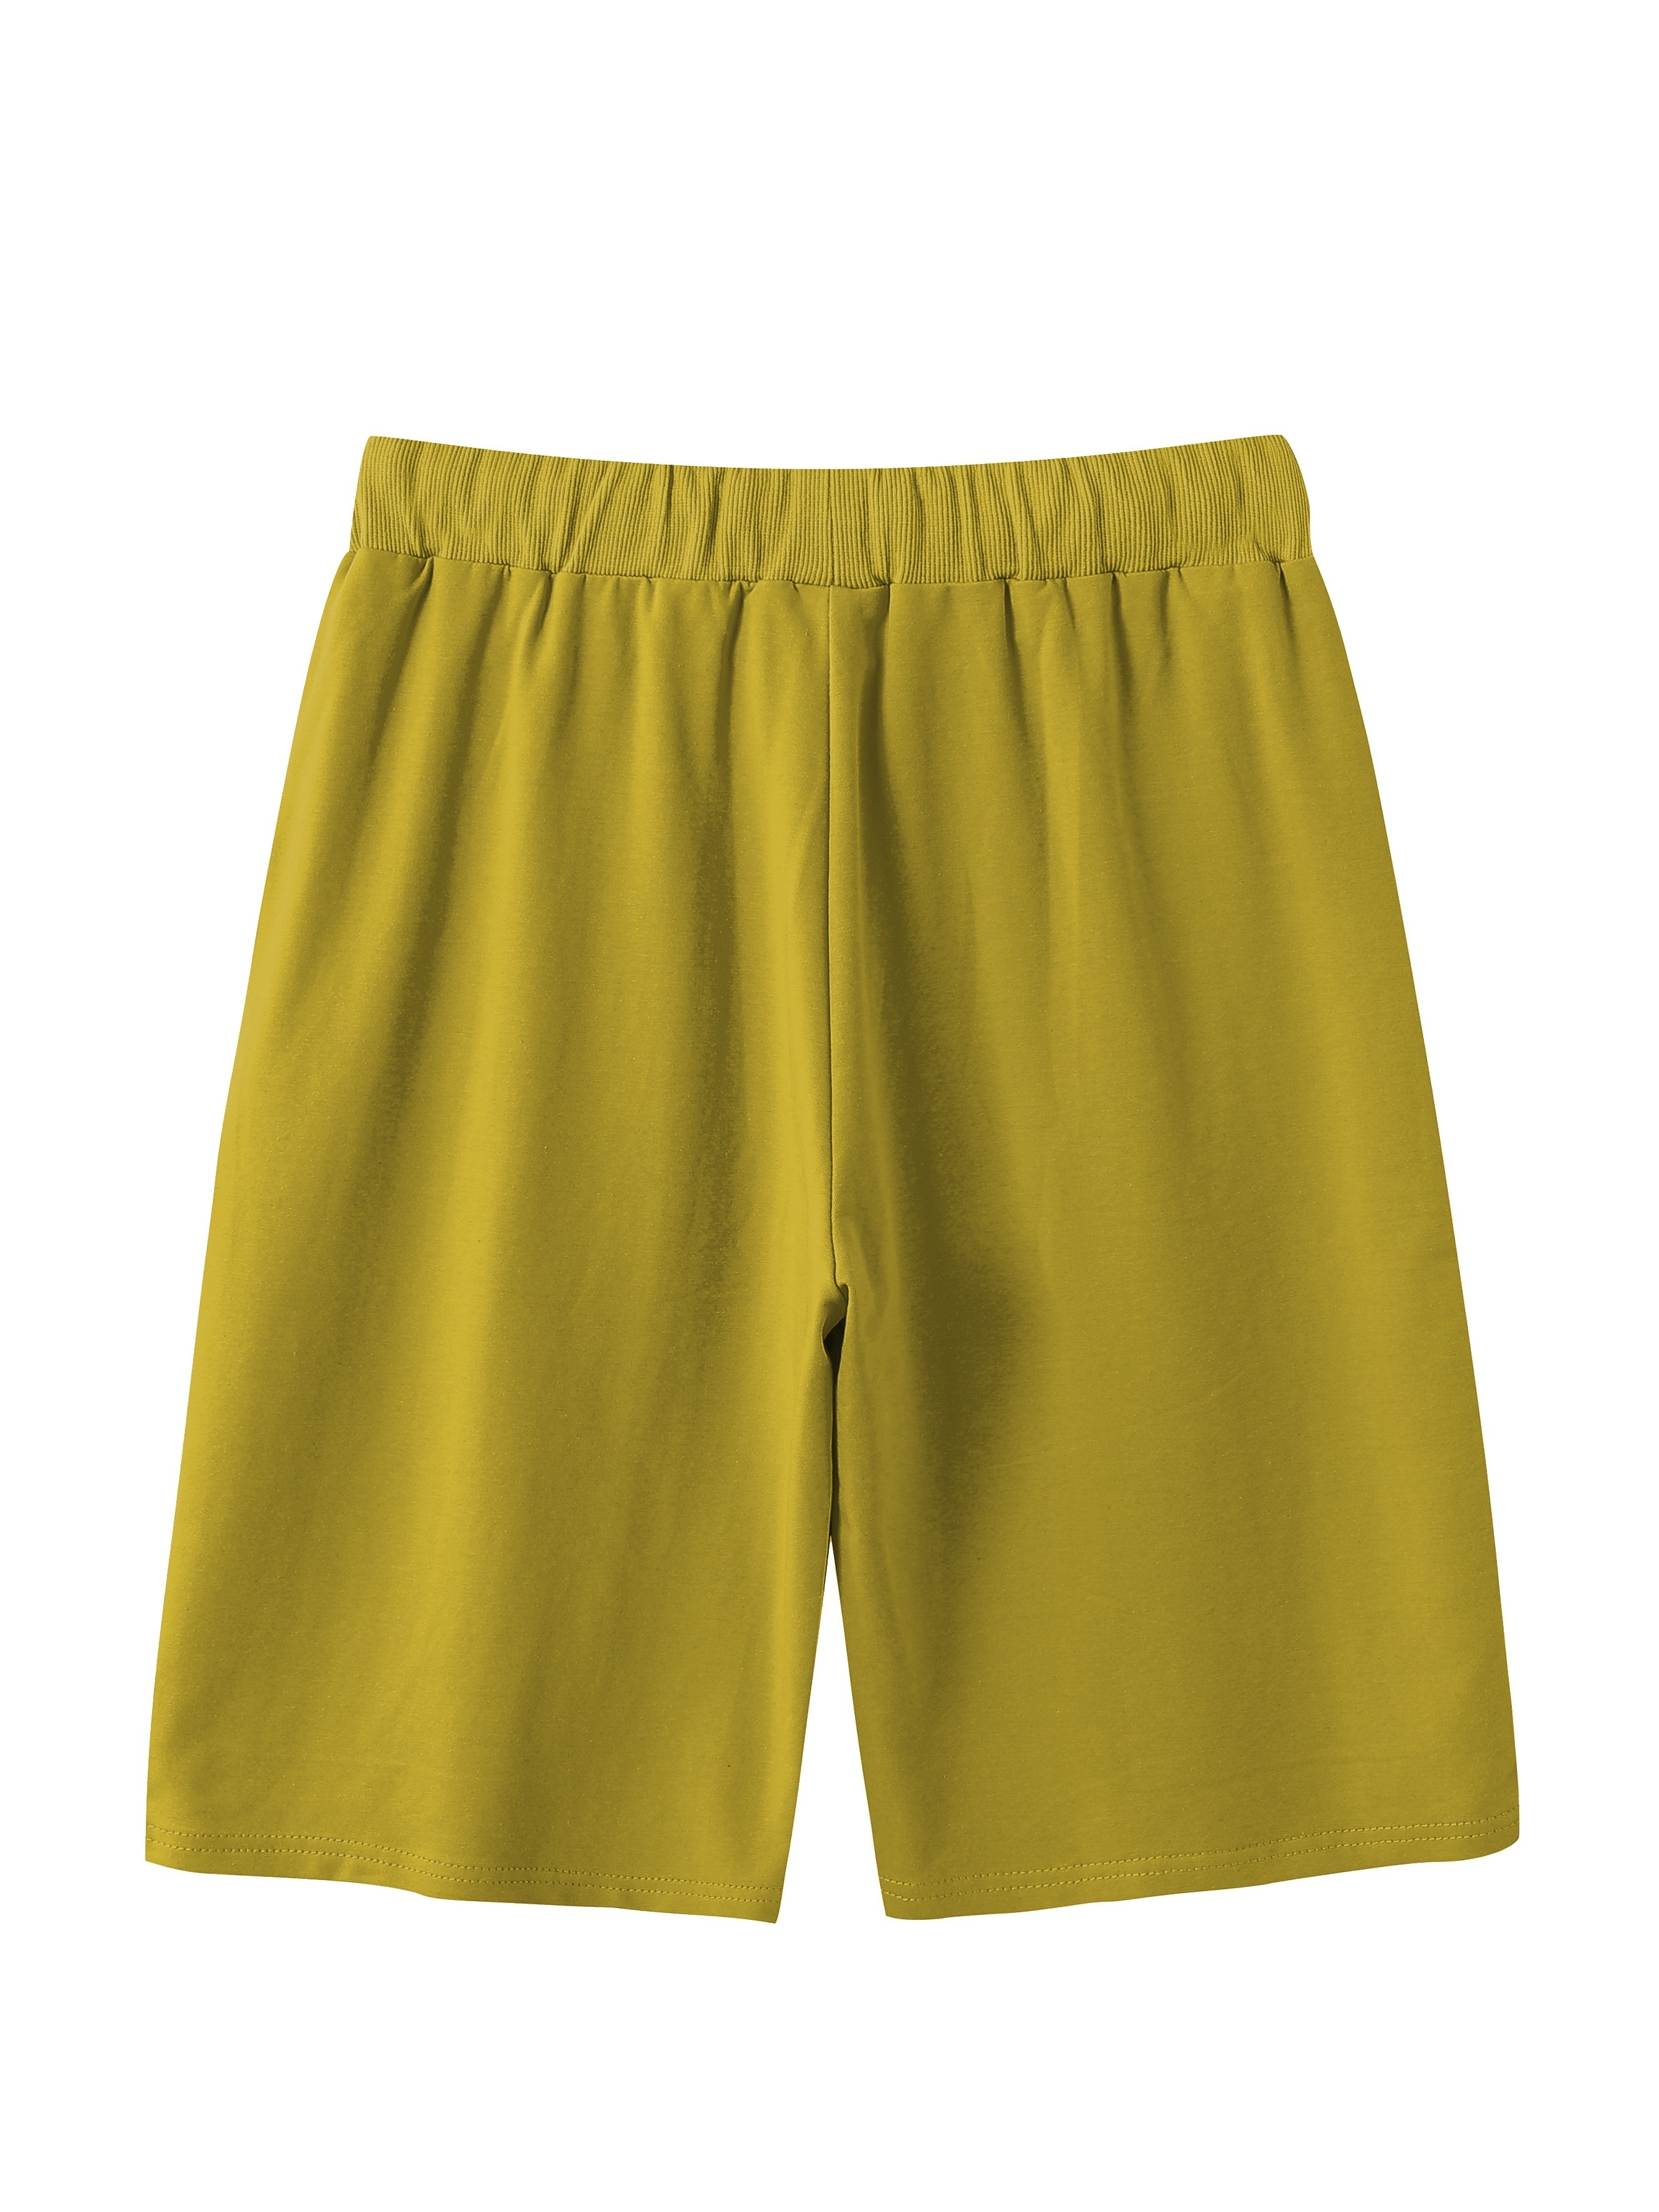 Women Summer Sports Wear, Solid Color Drawstring Elastic Waist Yoga Shorts  with Pockets for Girls, S/M/L/XL/XXL